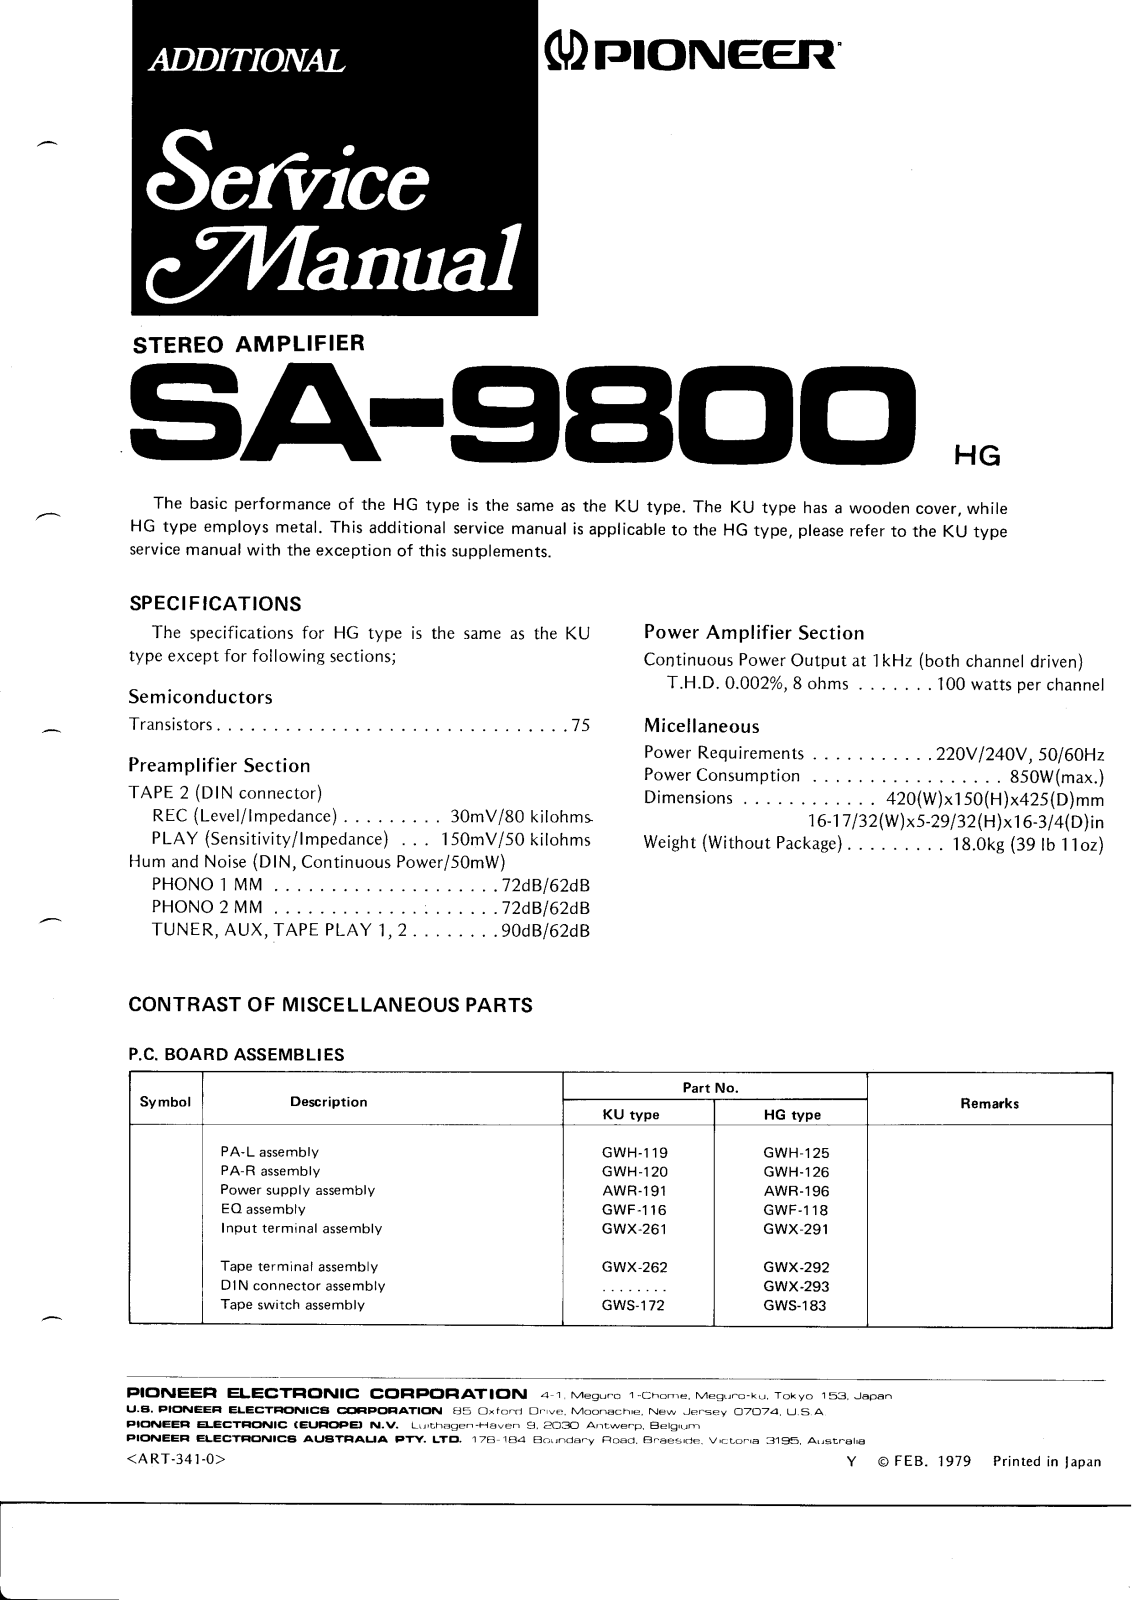 Pioneer SA-9800-HG Schematic